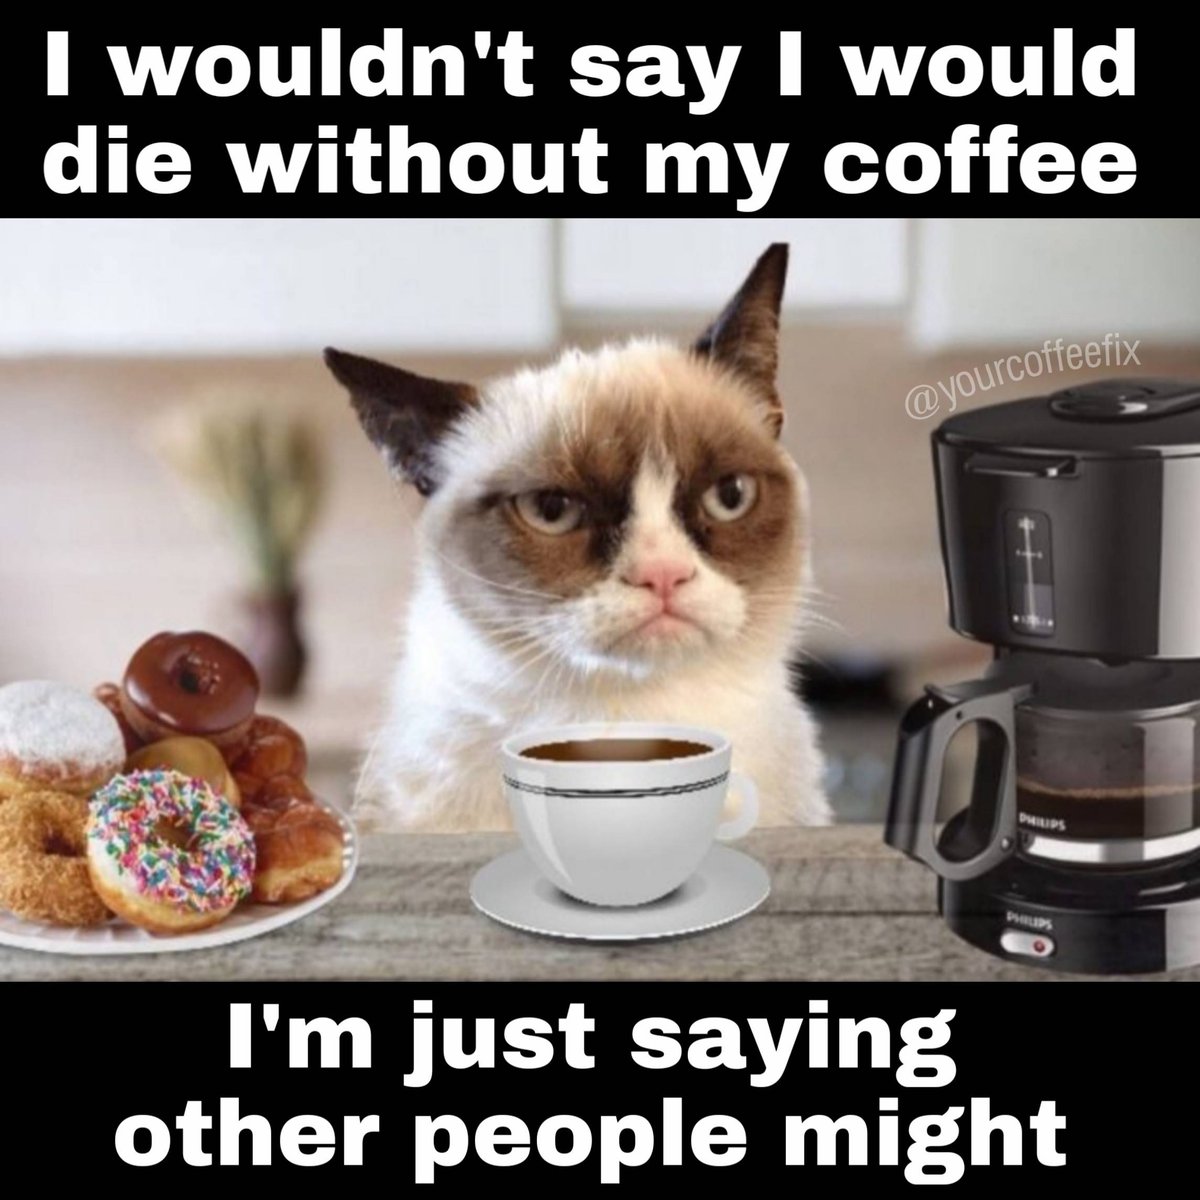 A coffee a day keeps the grumpy away!! 😺 #CoffeeMePlease

#grumpycat #grumpy #coffeeplease #coffeetime #coffeeandfriends #coffeememe #coffeebreak #caffeine #needcoffee #coffeesesh #coffeehumor #barista